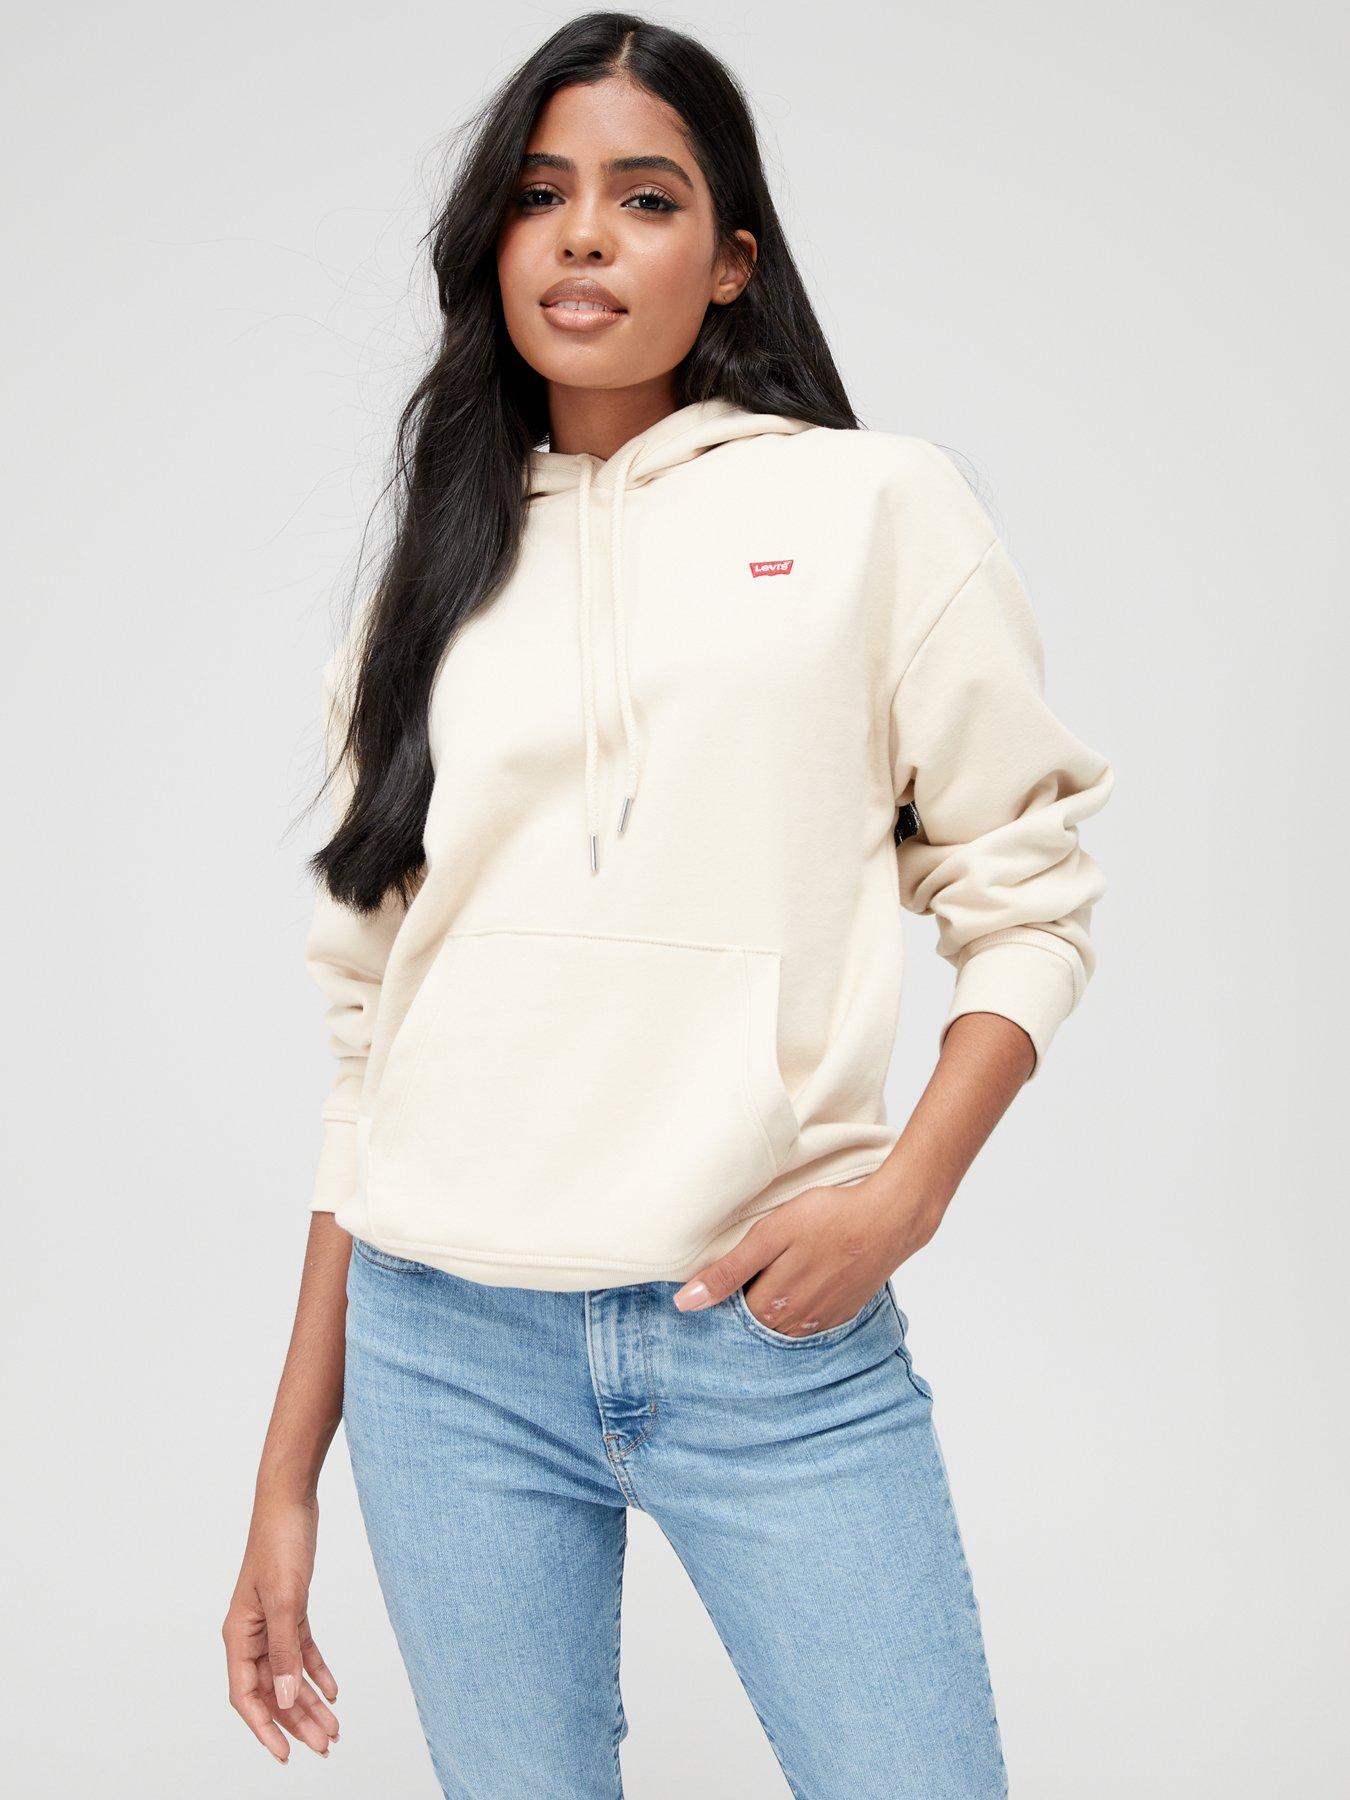 WOMEN FASHION Jumpers & Sweatshirts Sweatshirt Glitter Silver L AURIQUE sweatshirt discount 52% 